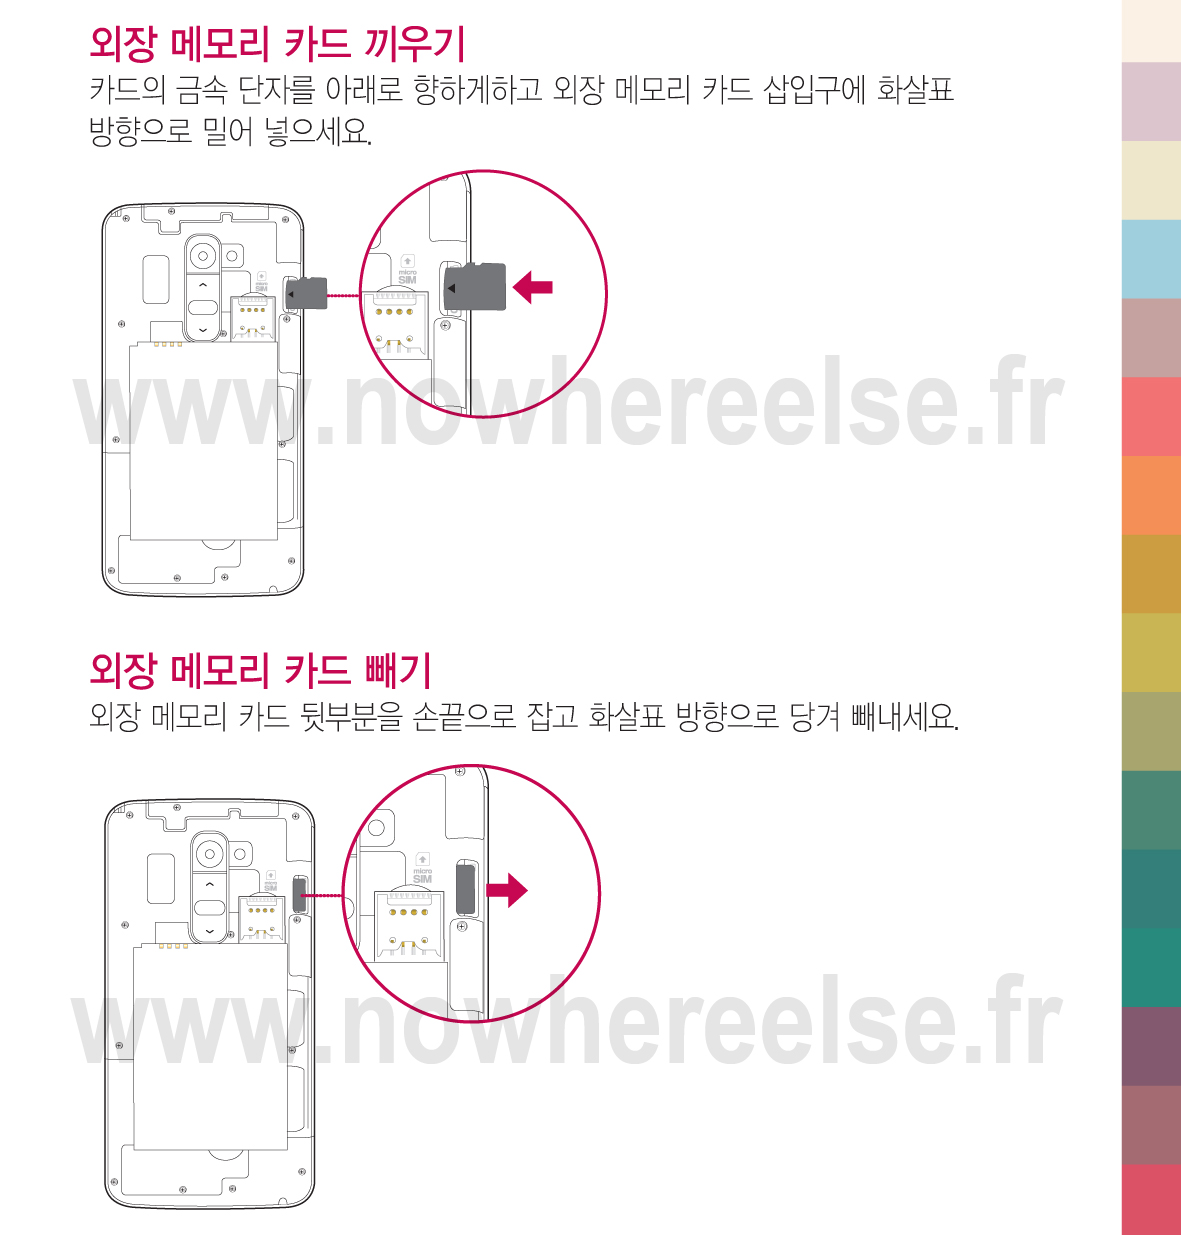 LG G2 leaked manual confirms nano-SIM slot, microSD slot, removable